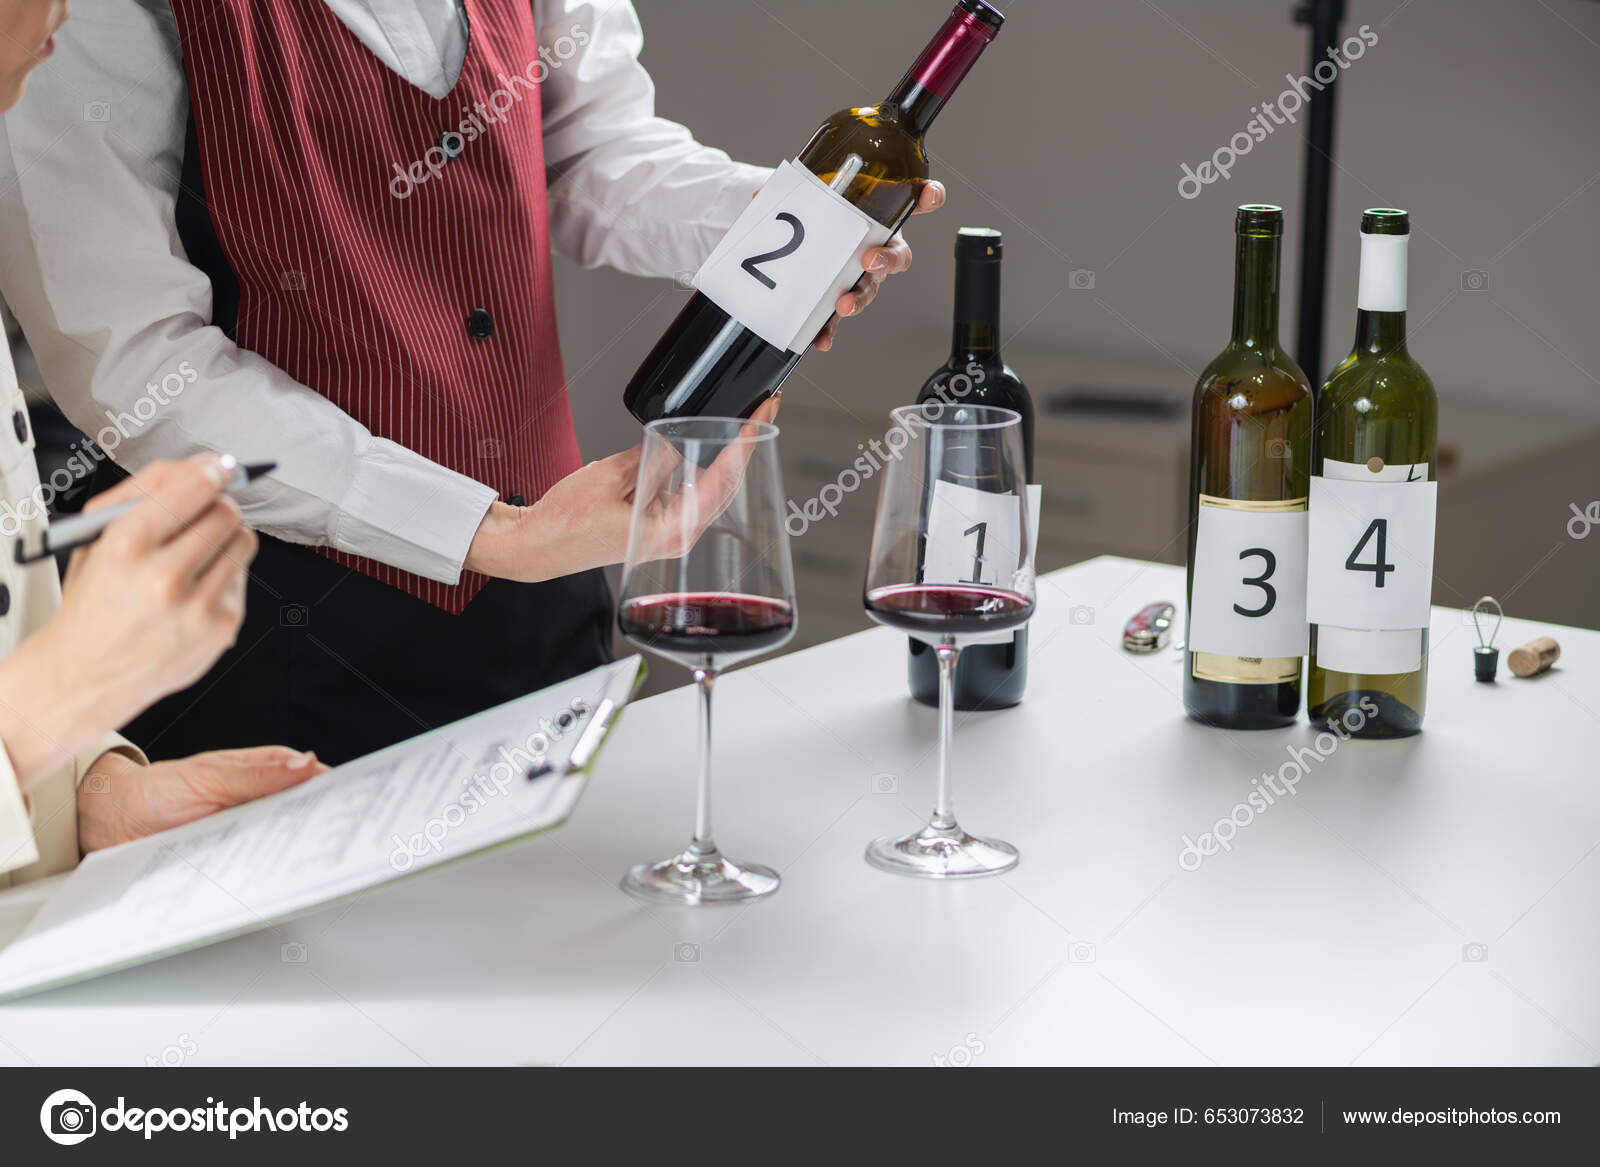 https://st5.depositphotos.com/6644020/65307/i/1600/depositphotos_653073832-stock-photo-blind-wine-tasting-identifying-different.jpg